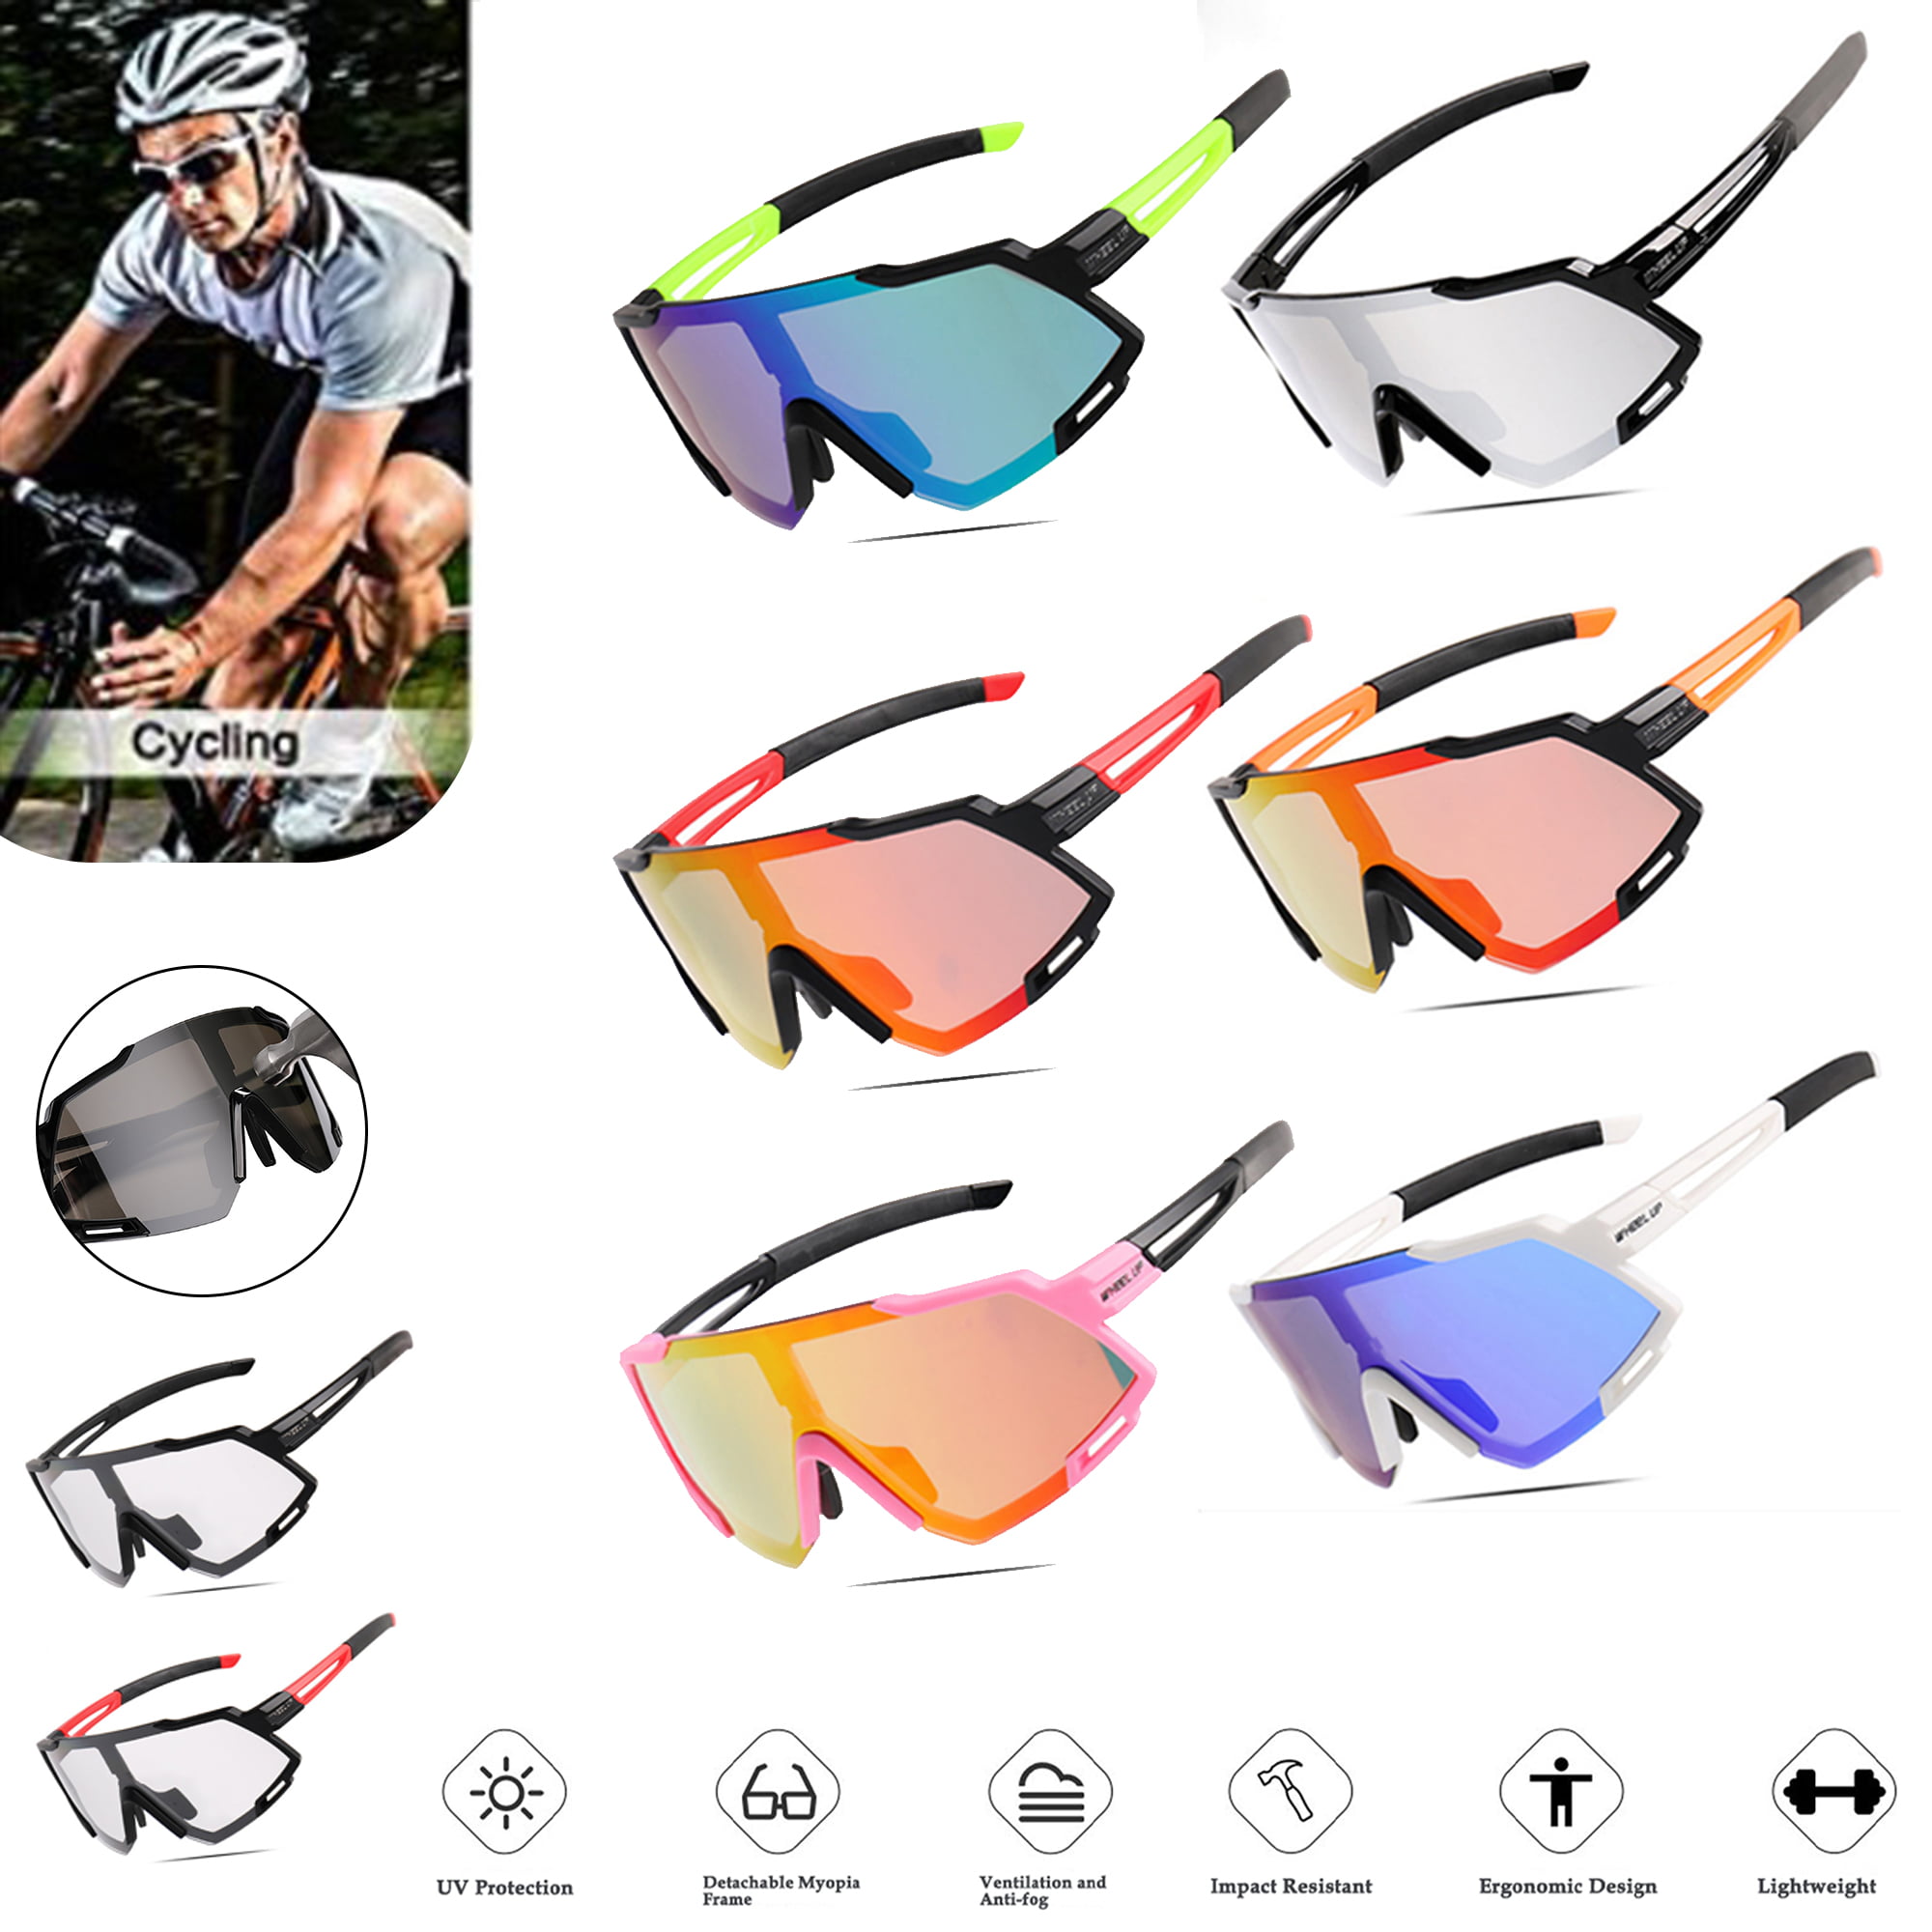 Polarized Cycling Glasses Bike Goggles Eyewear Sunglasses 3 Lens Mirrored UV400 